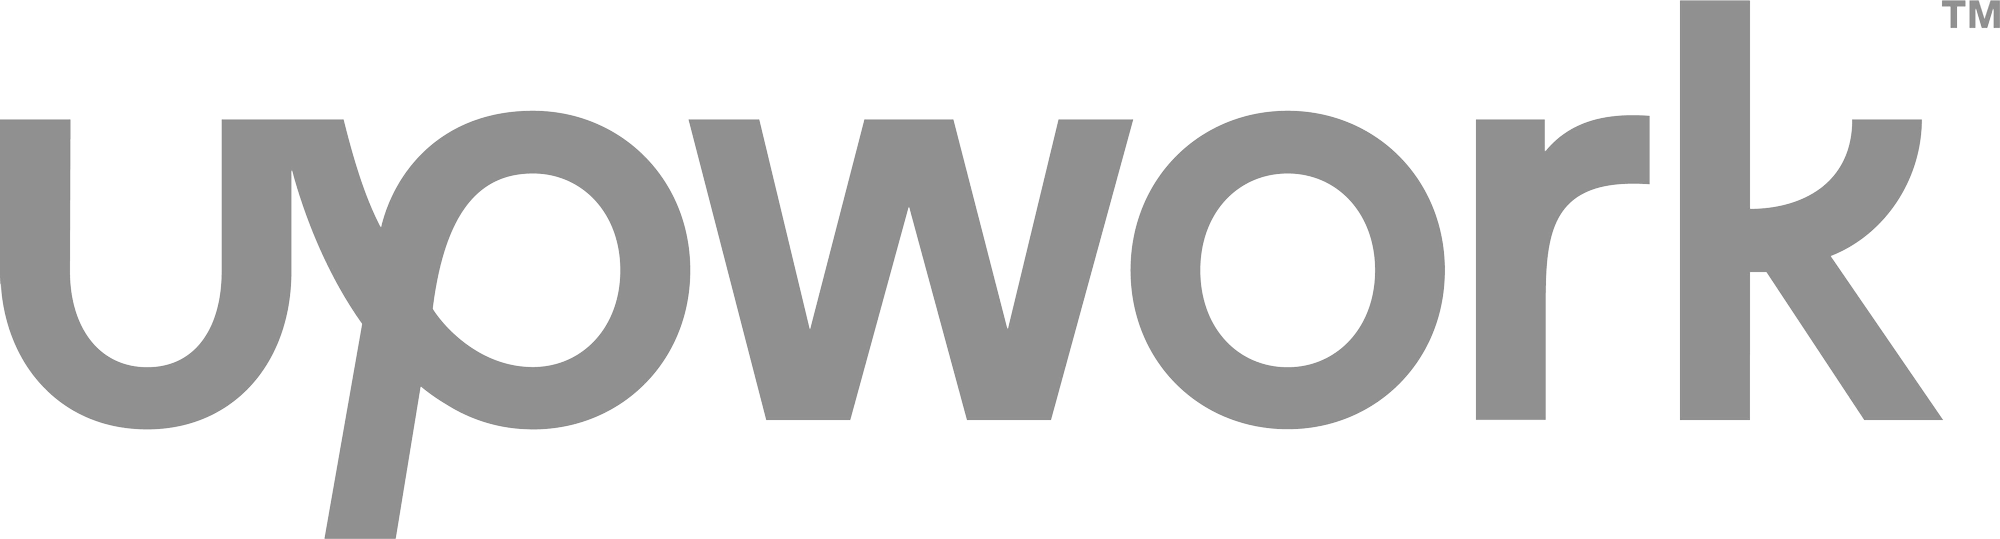 upwork-logo-2022 1 bw